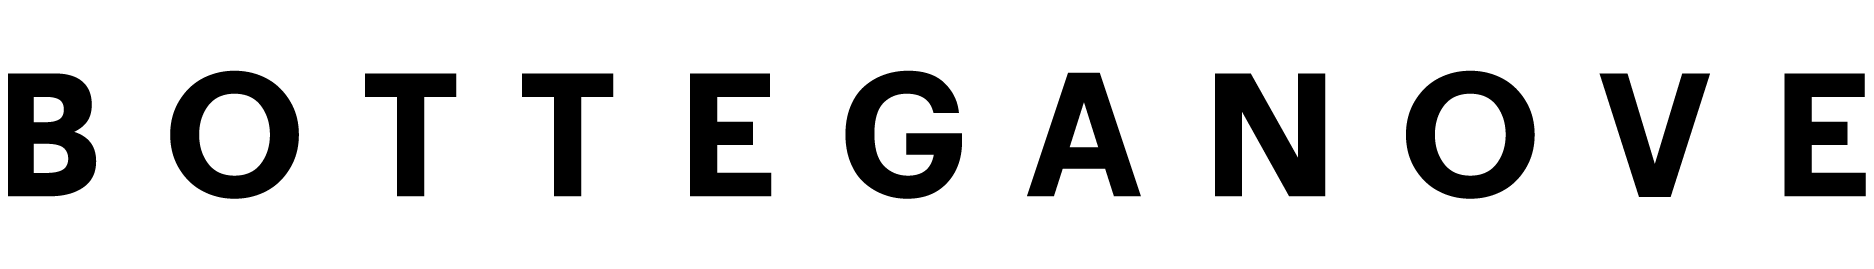 Botteganove Logo